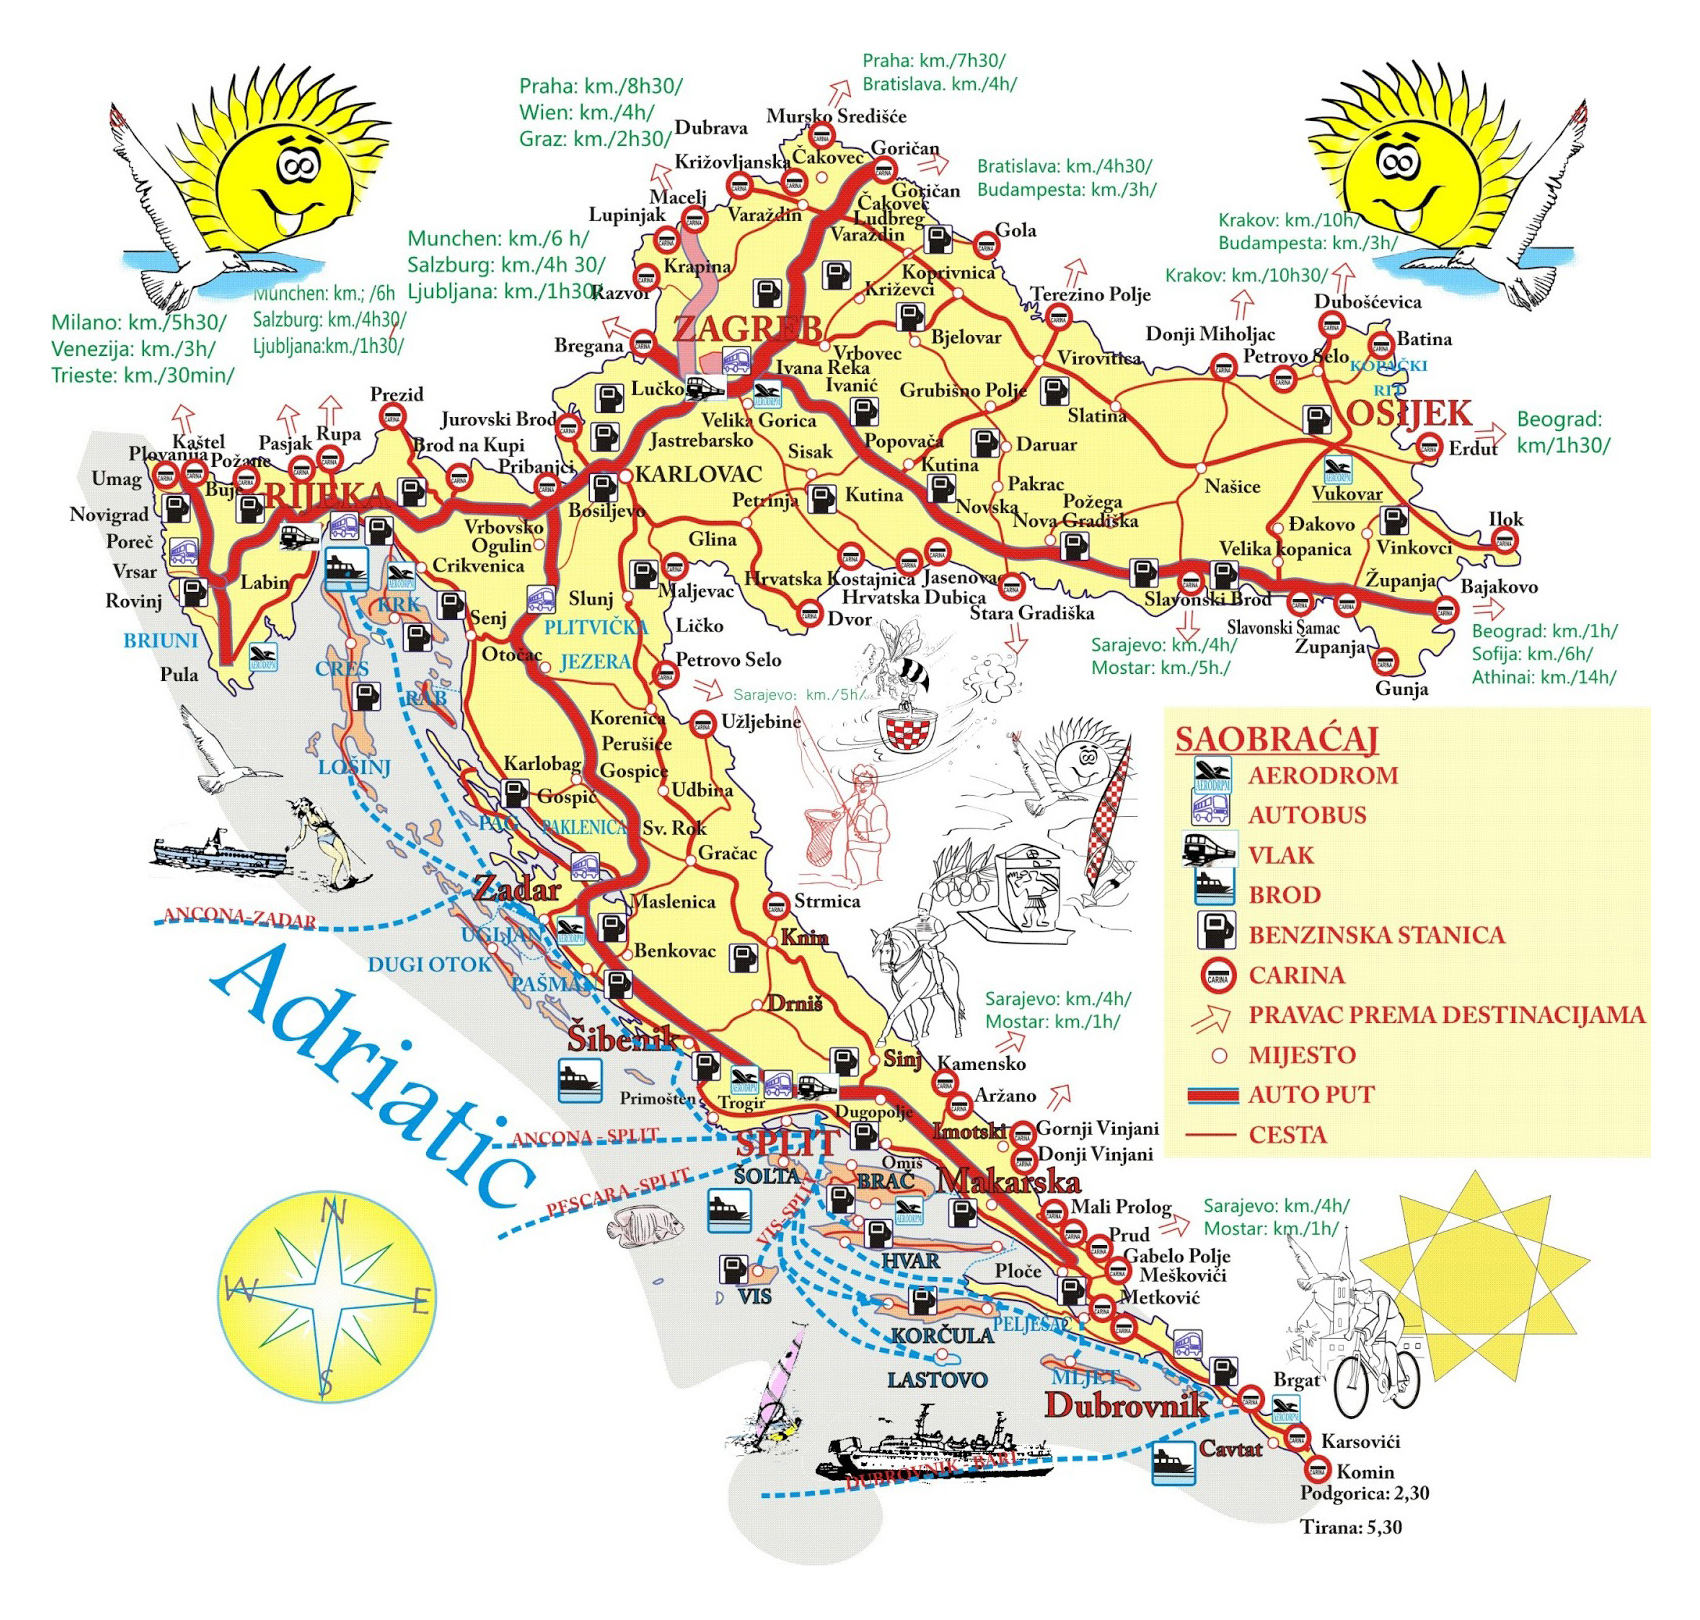 large-travel-map-of-croatia-croatia-europe-mapsland-maps-of-the